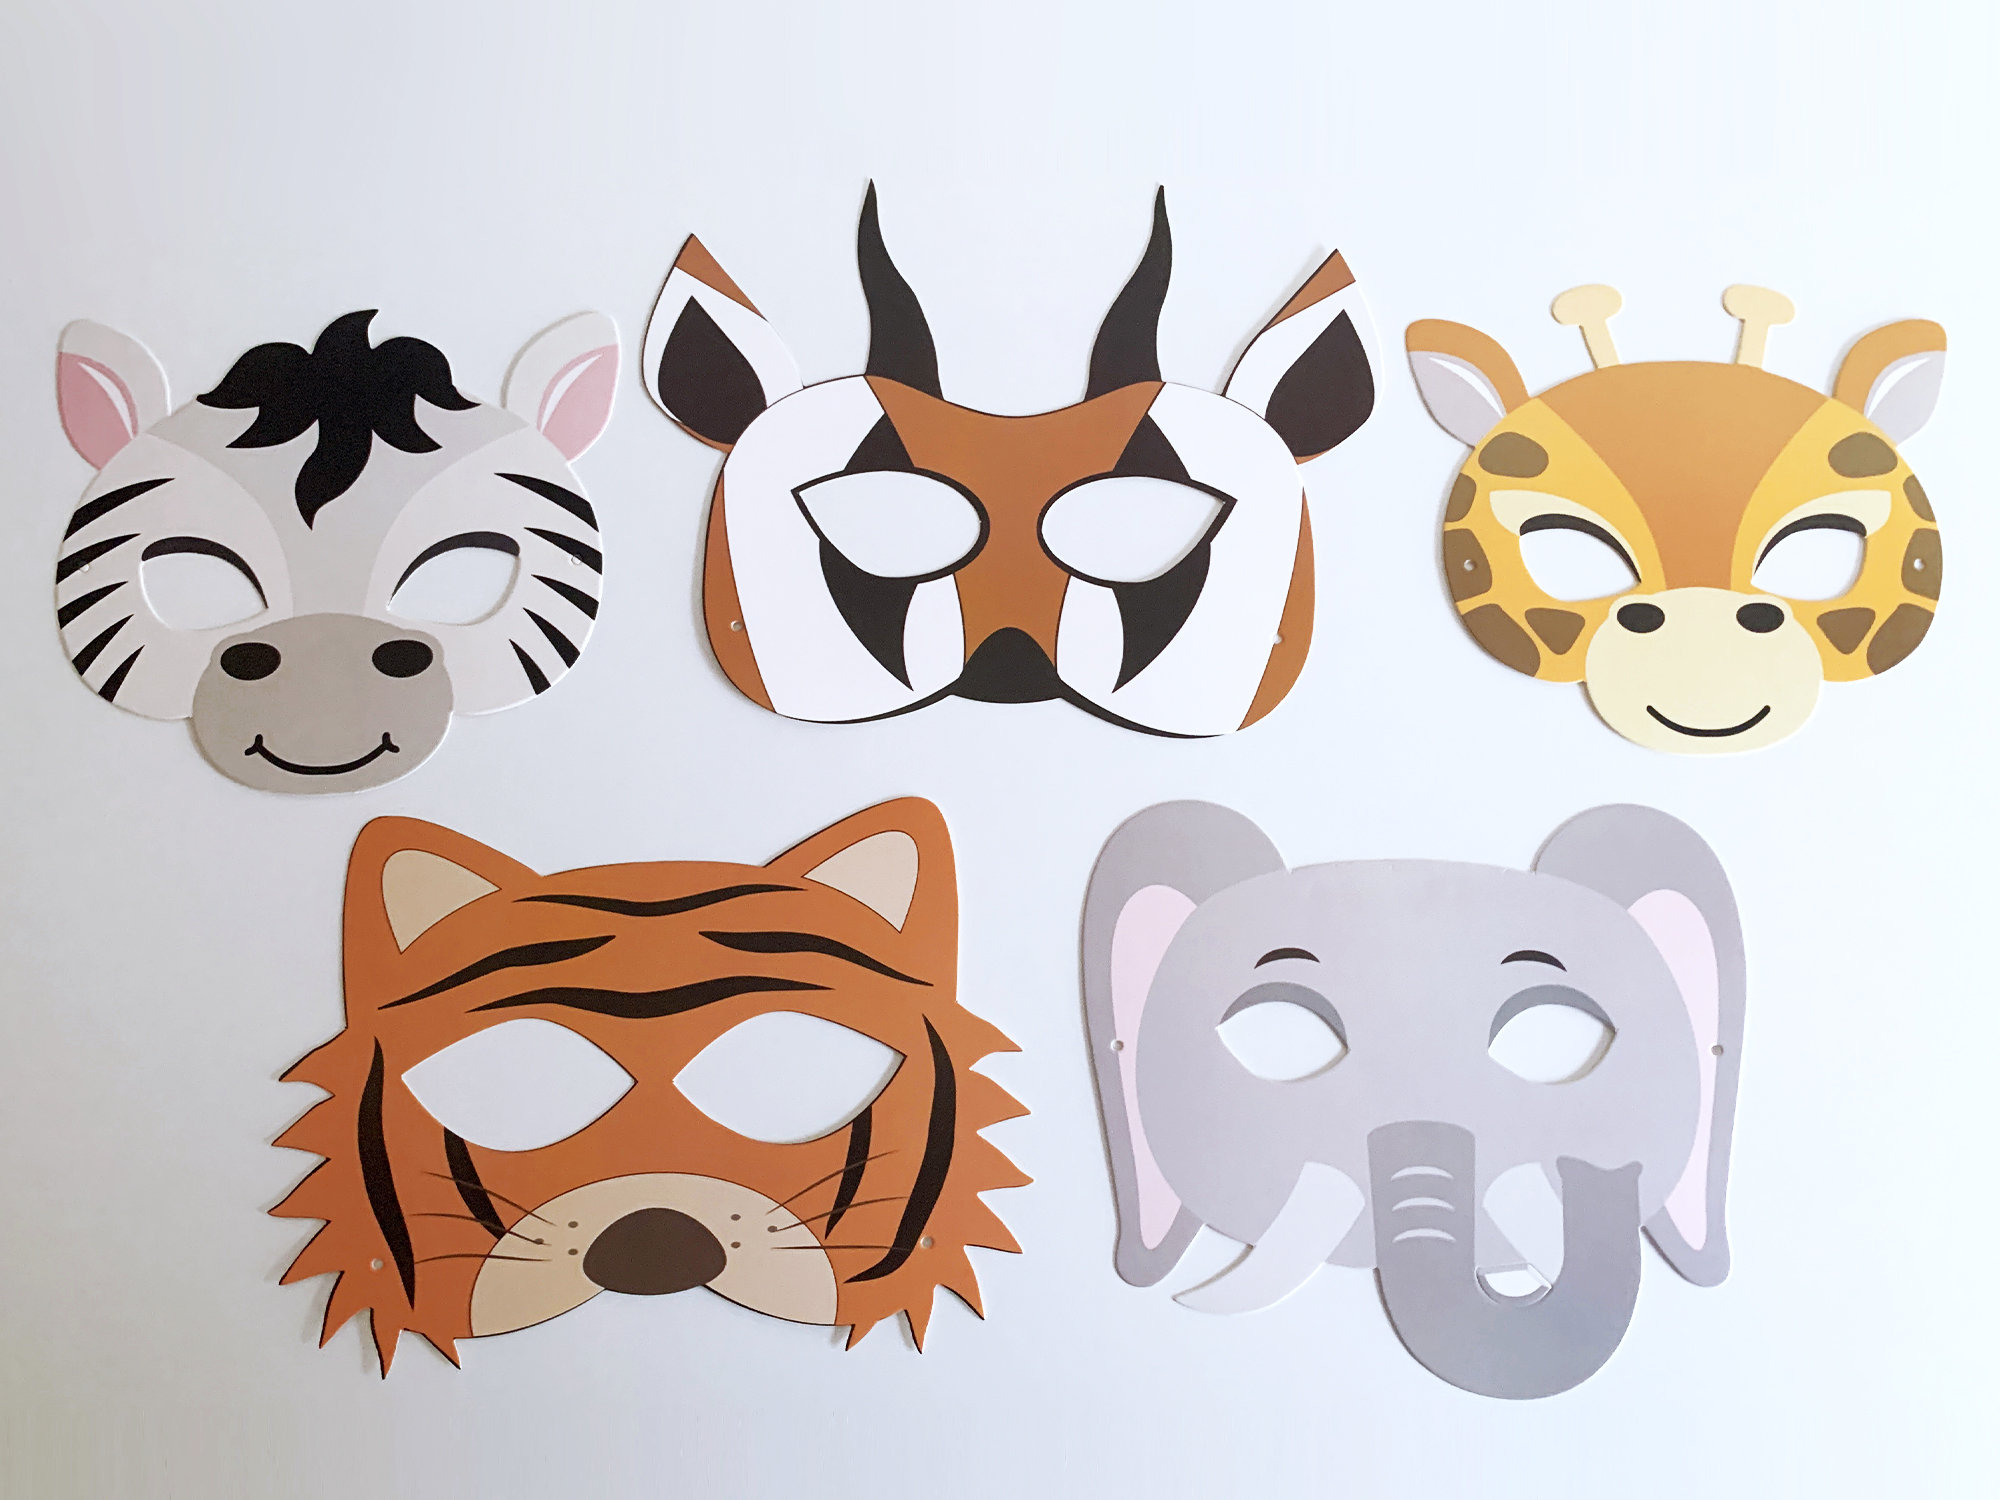 Jr. RangerLand North American Animal Paper Masks Craft Kit